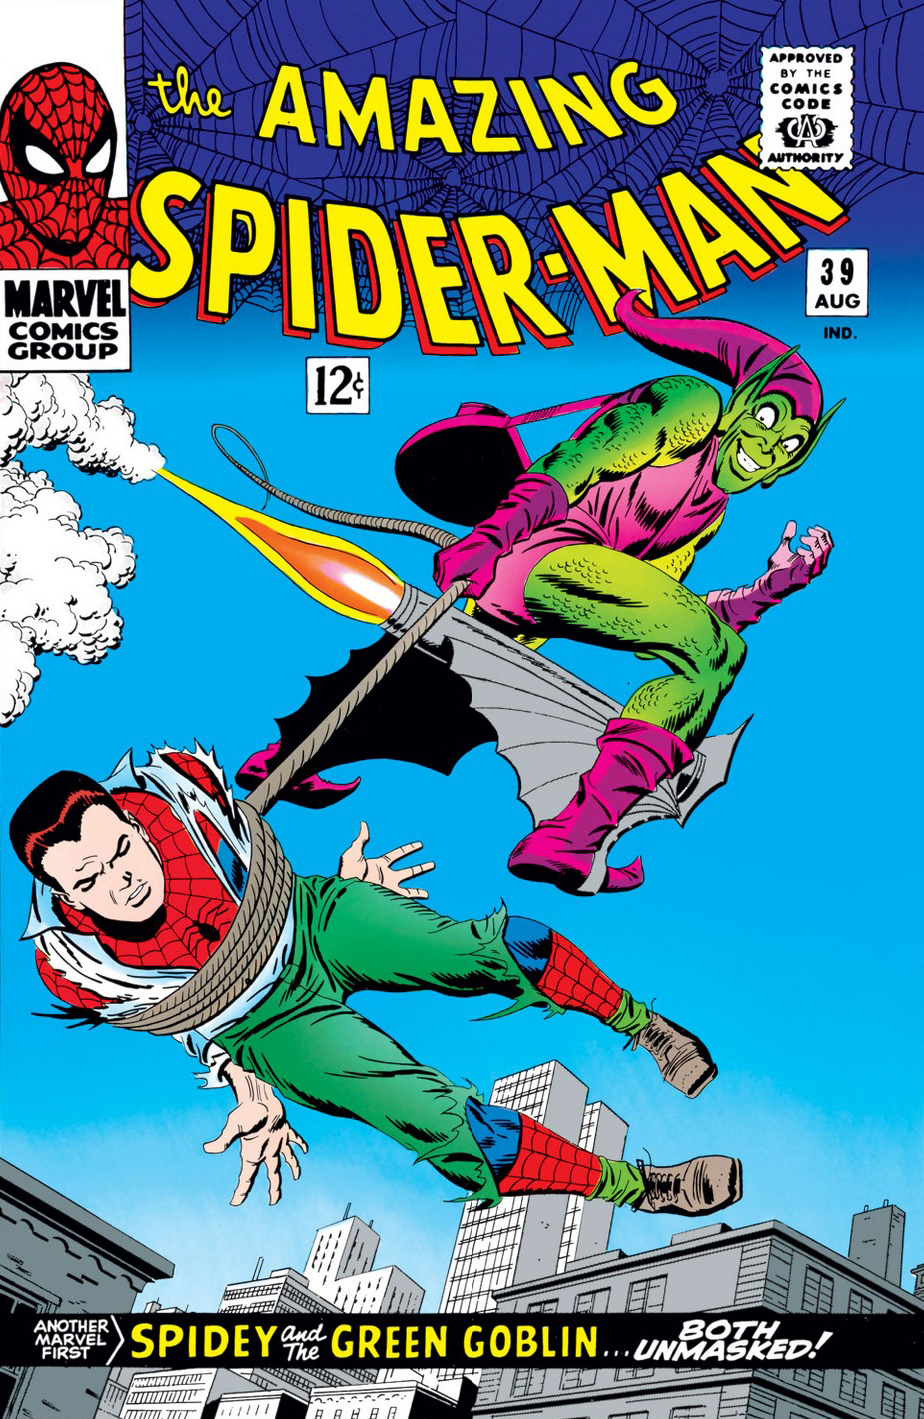 The Amazing Spider-Man (1963) #39